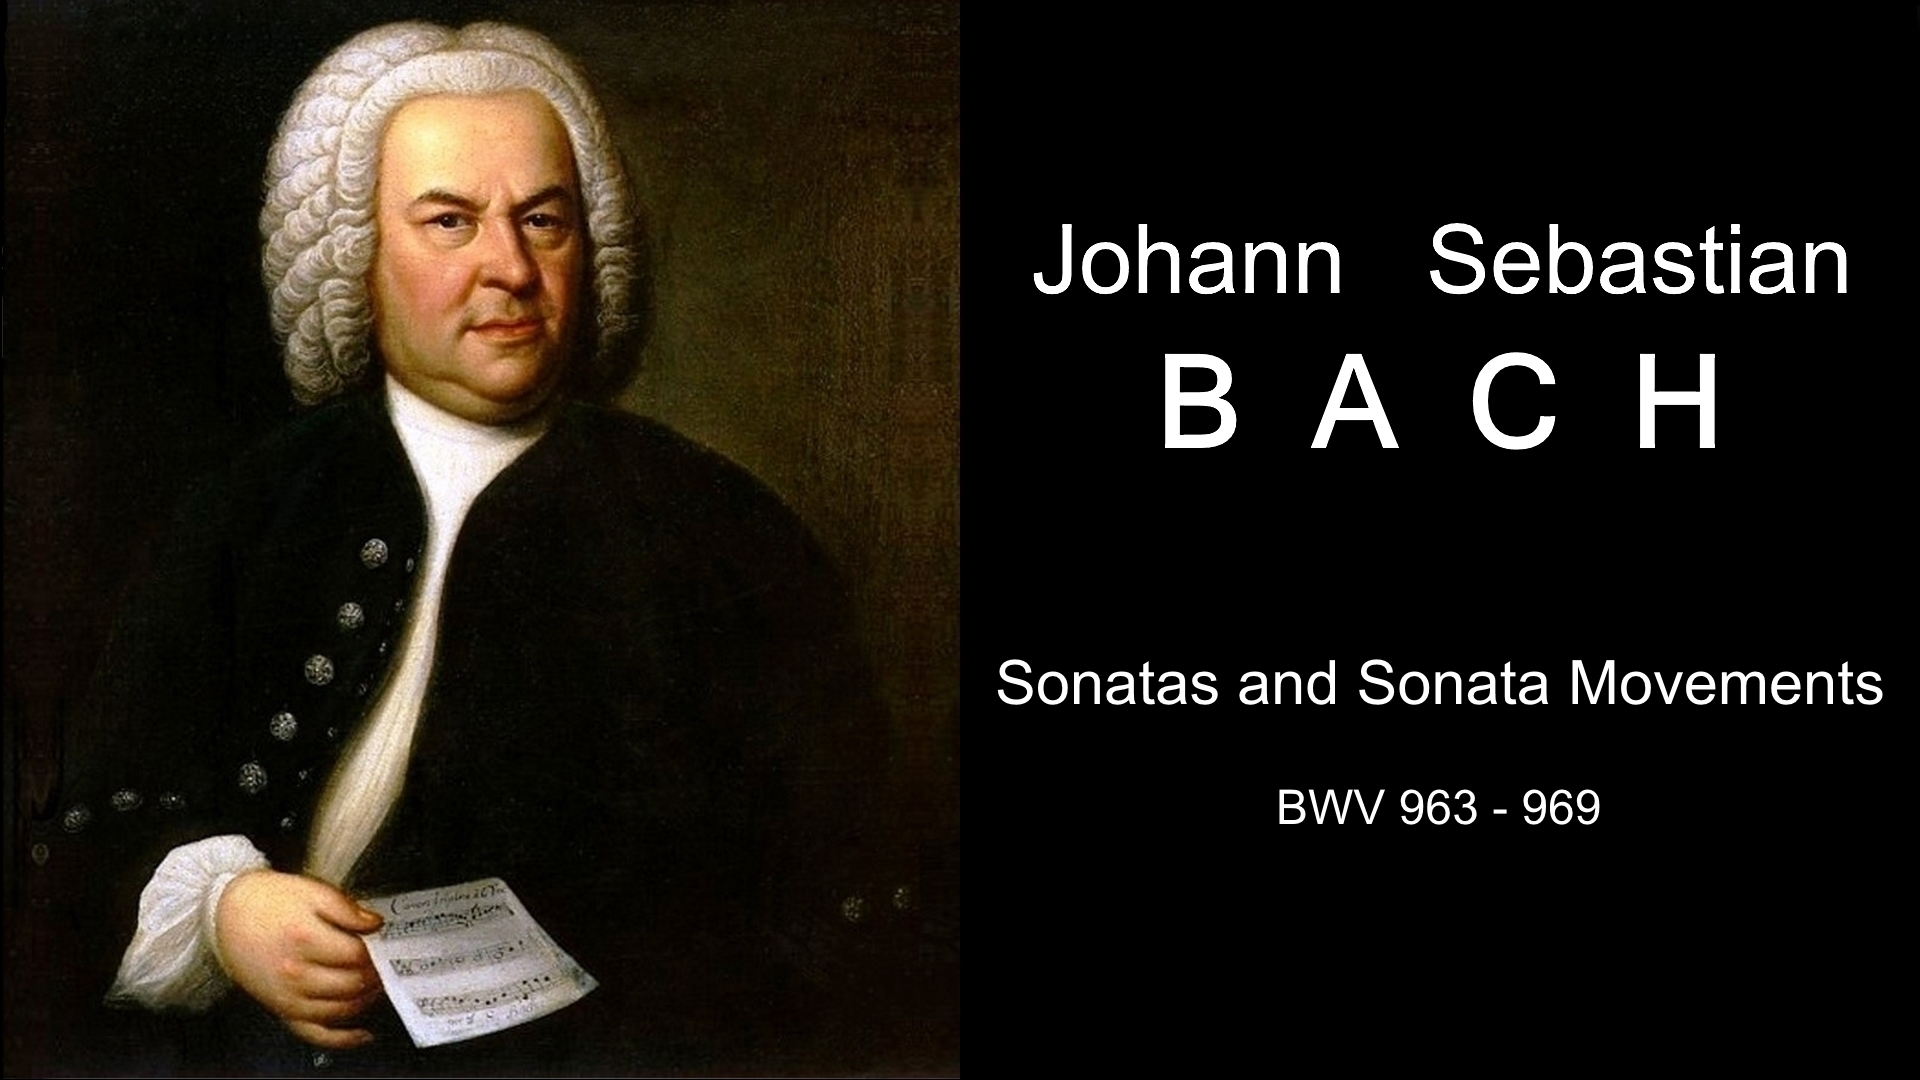 Музыка баха для улучшения. Иоганн Себастьян Бах. Иоганн Себастьян Бах портрет композитора. Иоганн Себастьян Бах (1685-1750). Иоганн Себастьян Бах эпоха Барокко.